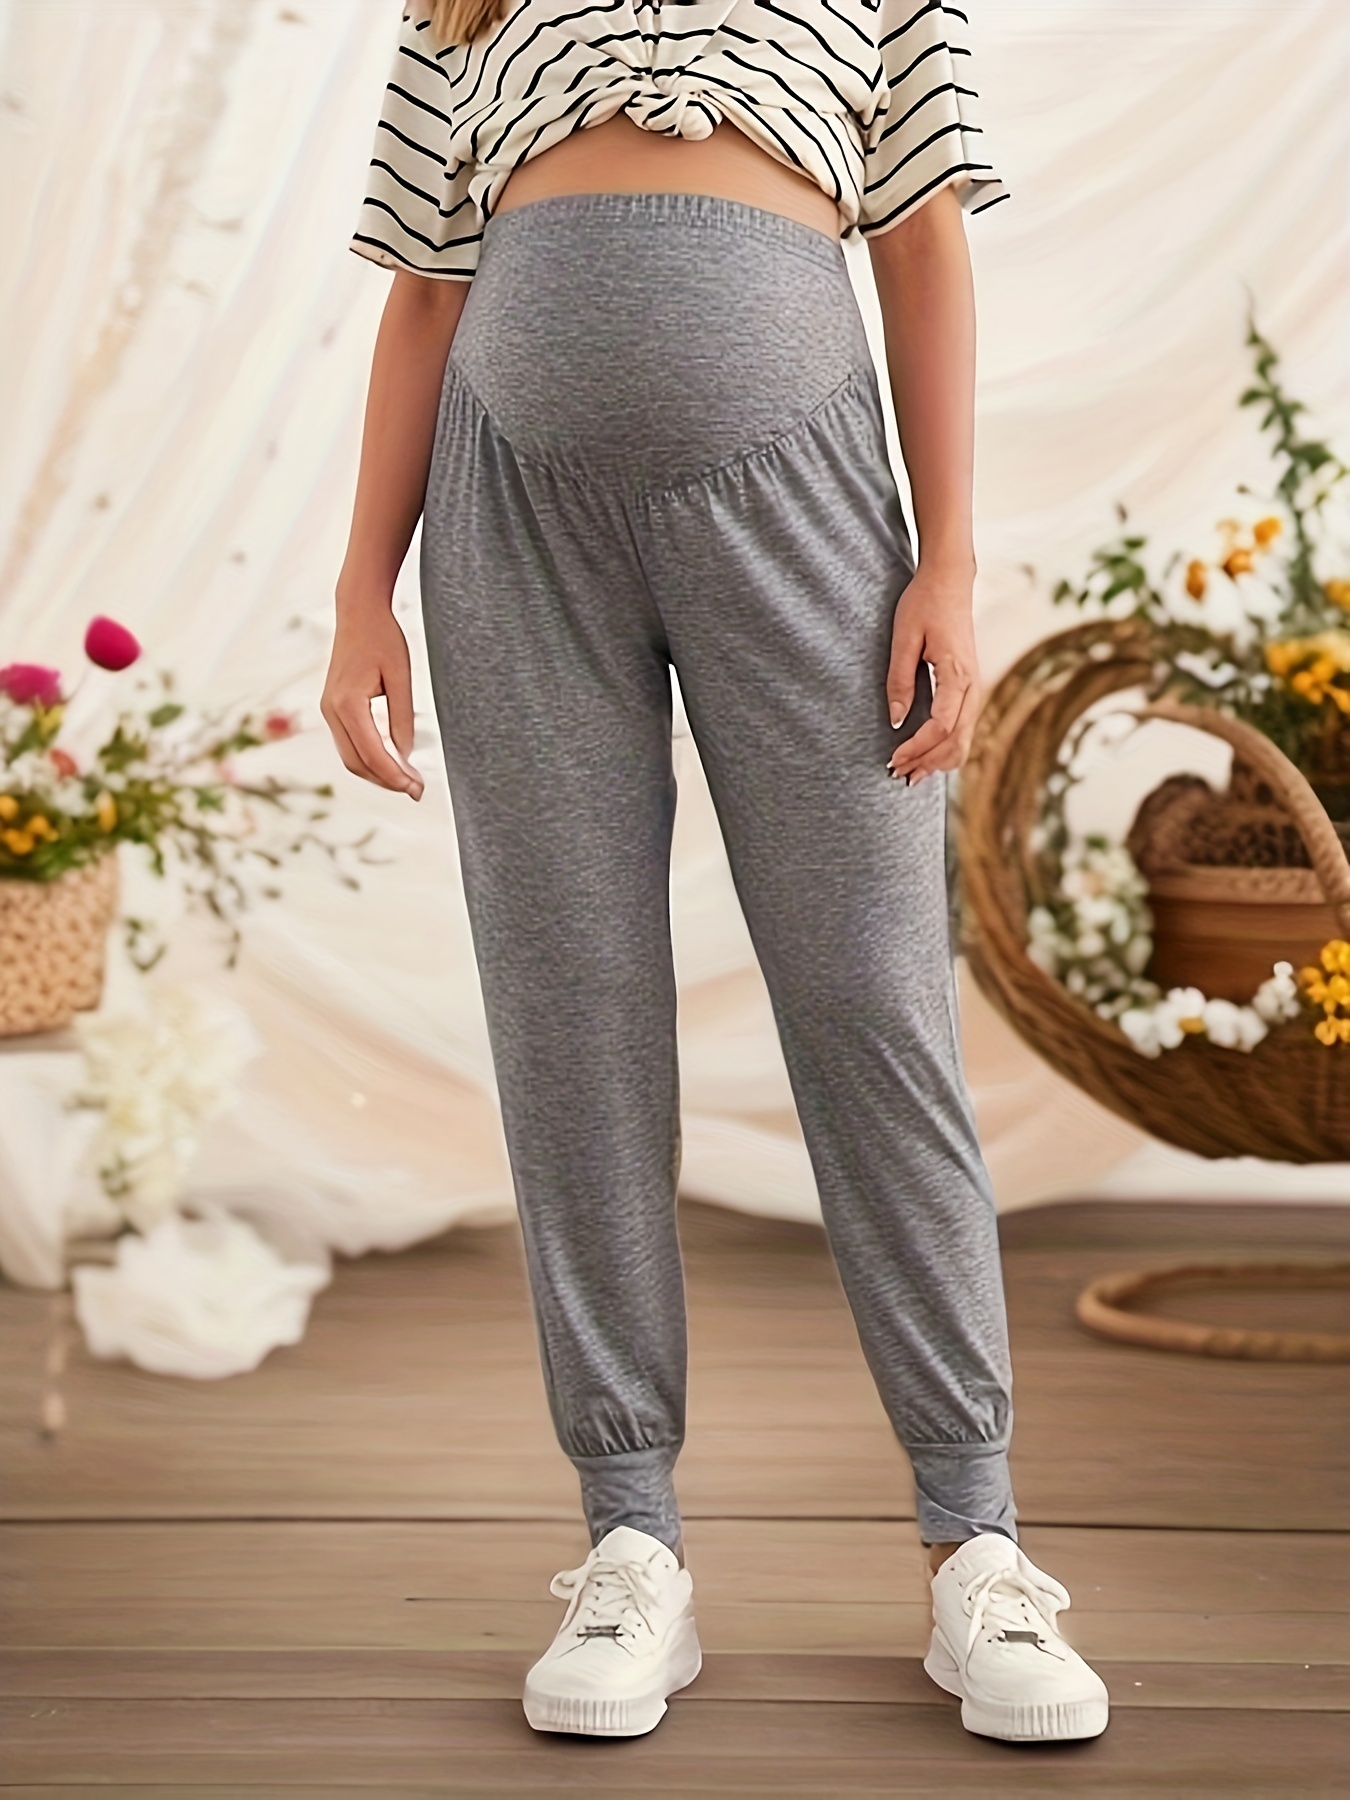 High waist Adjustable Warm Maternity Leggings pregnancy dress elastic pants  For Pregnant Women-N5